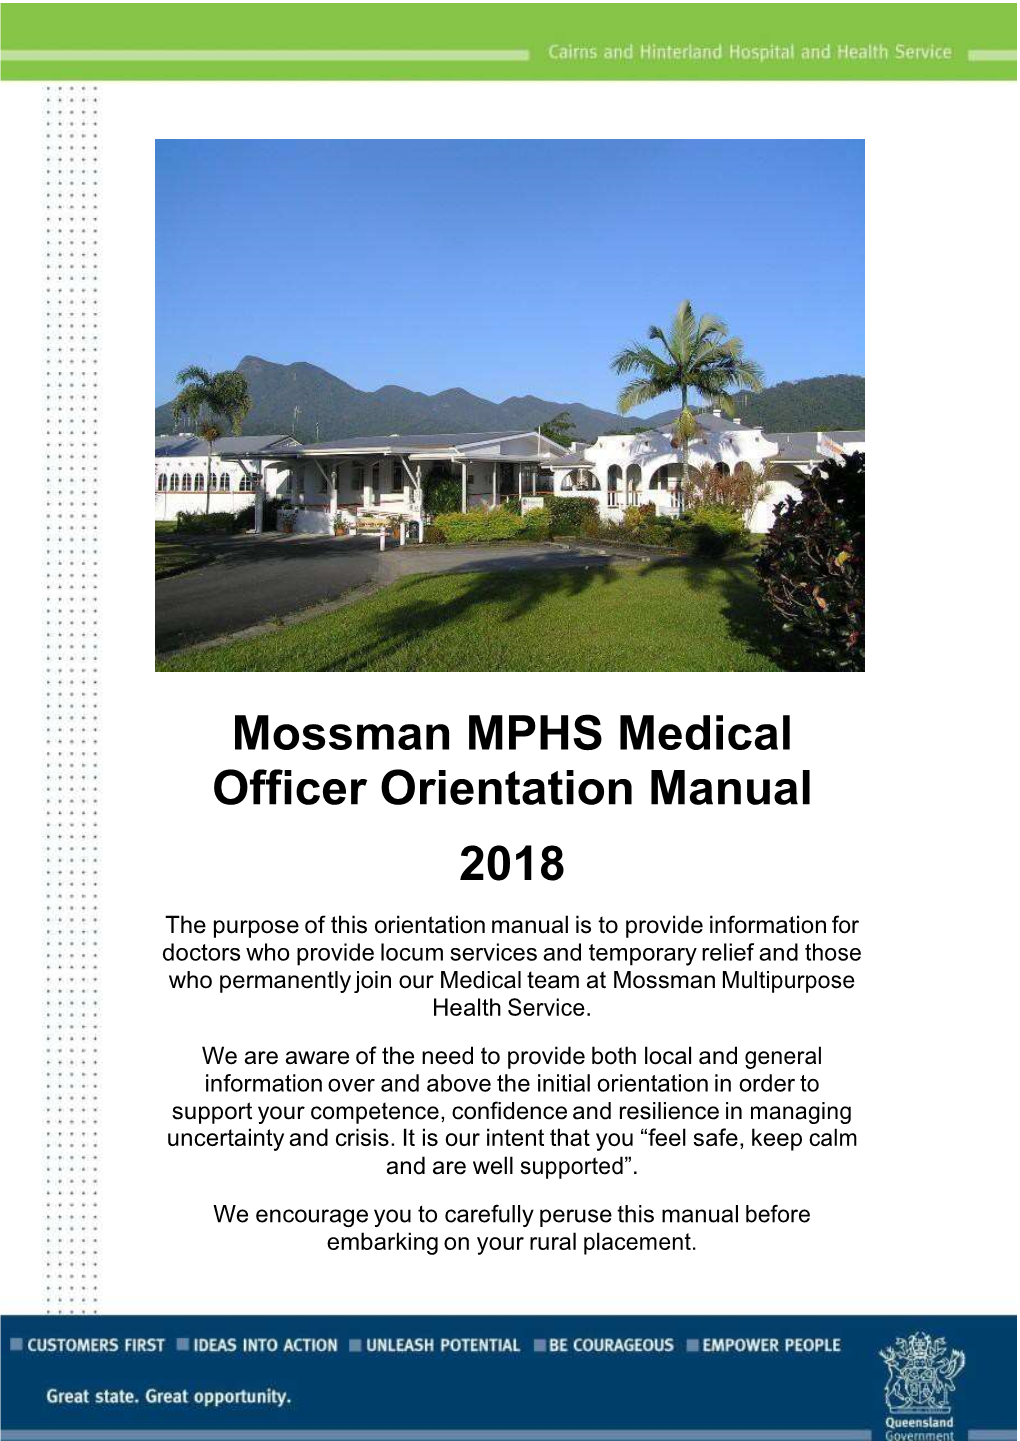 Mossman MPHS Medical Officer Orientation Manual 2018